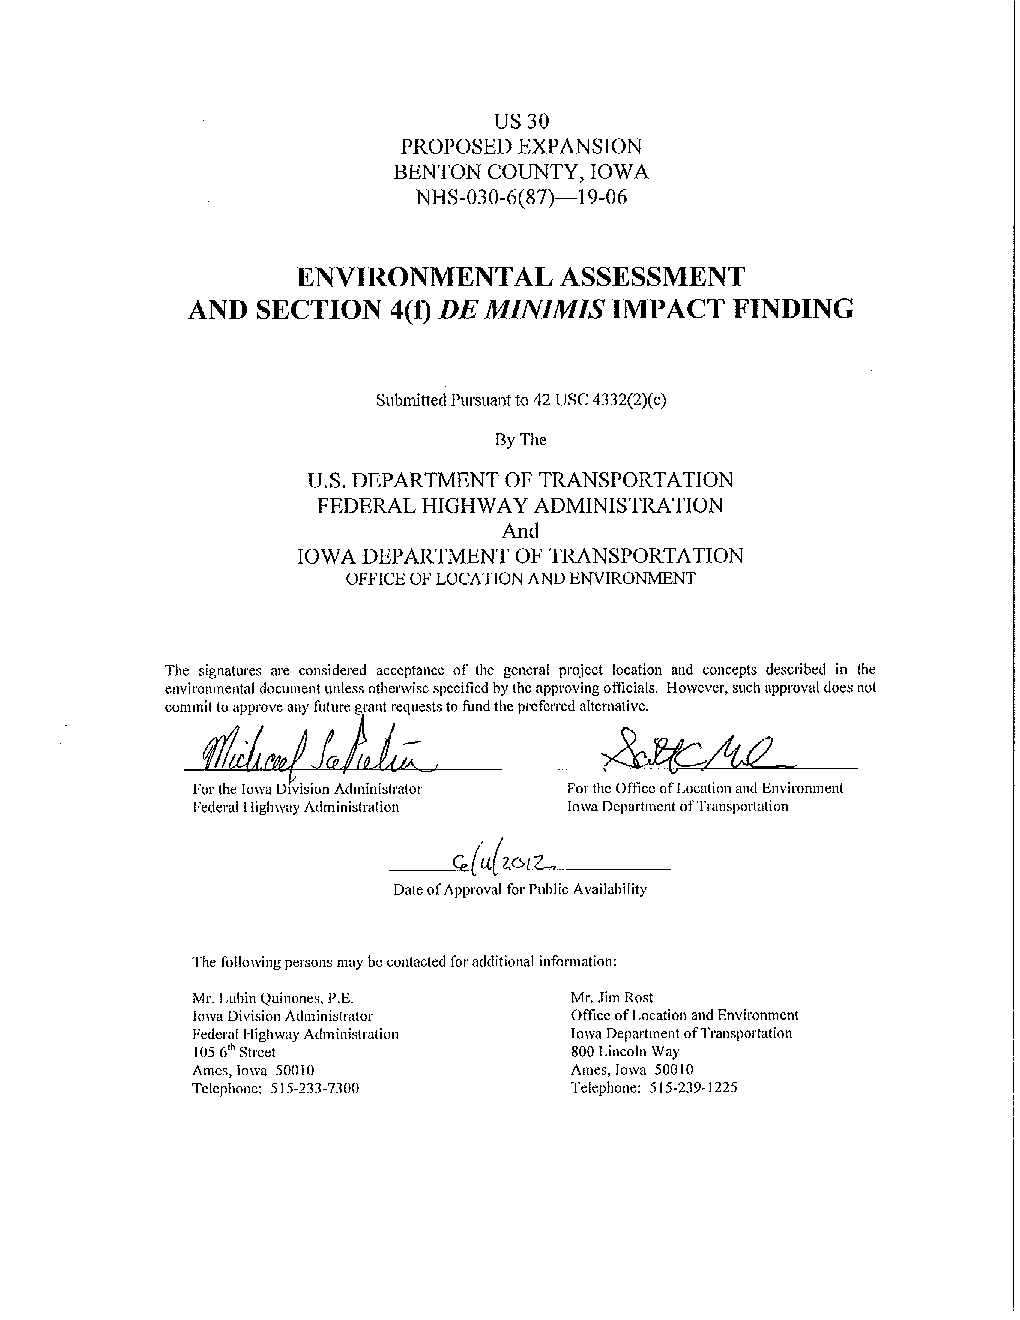 Environmental Assessment (EA)